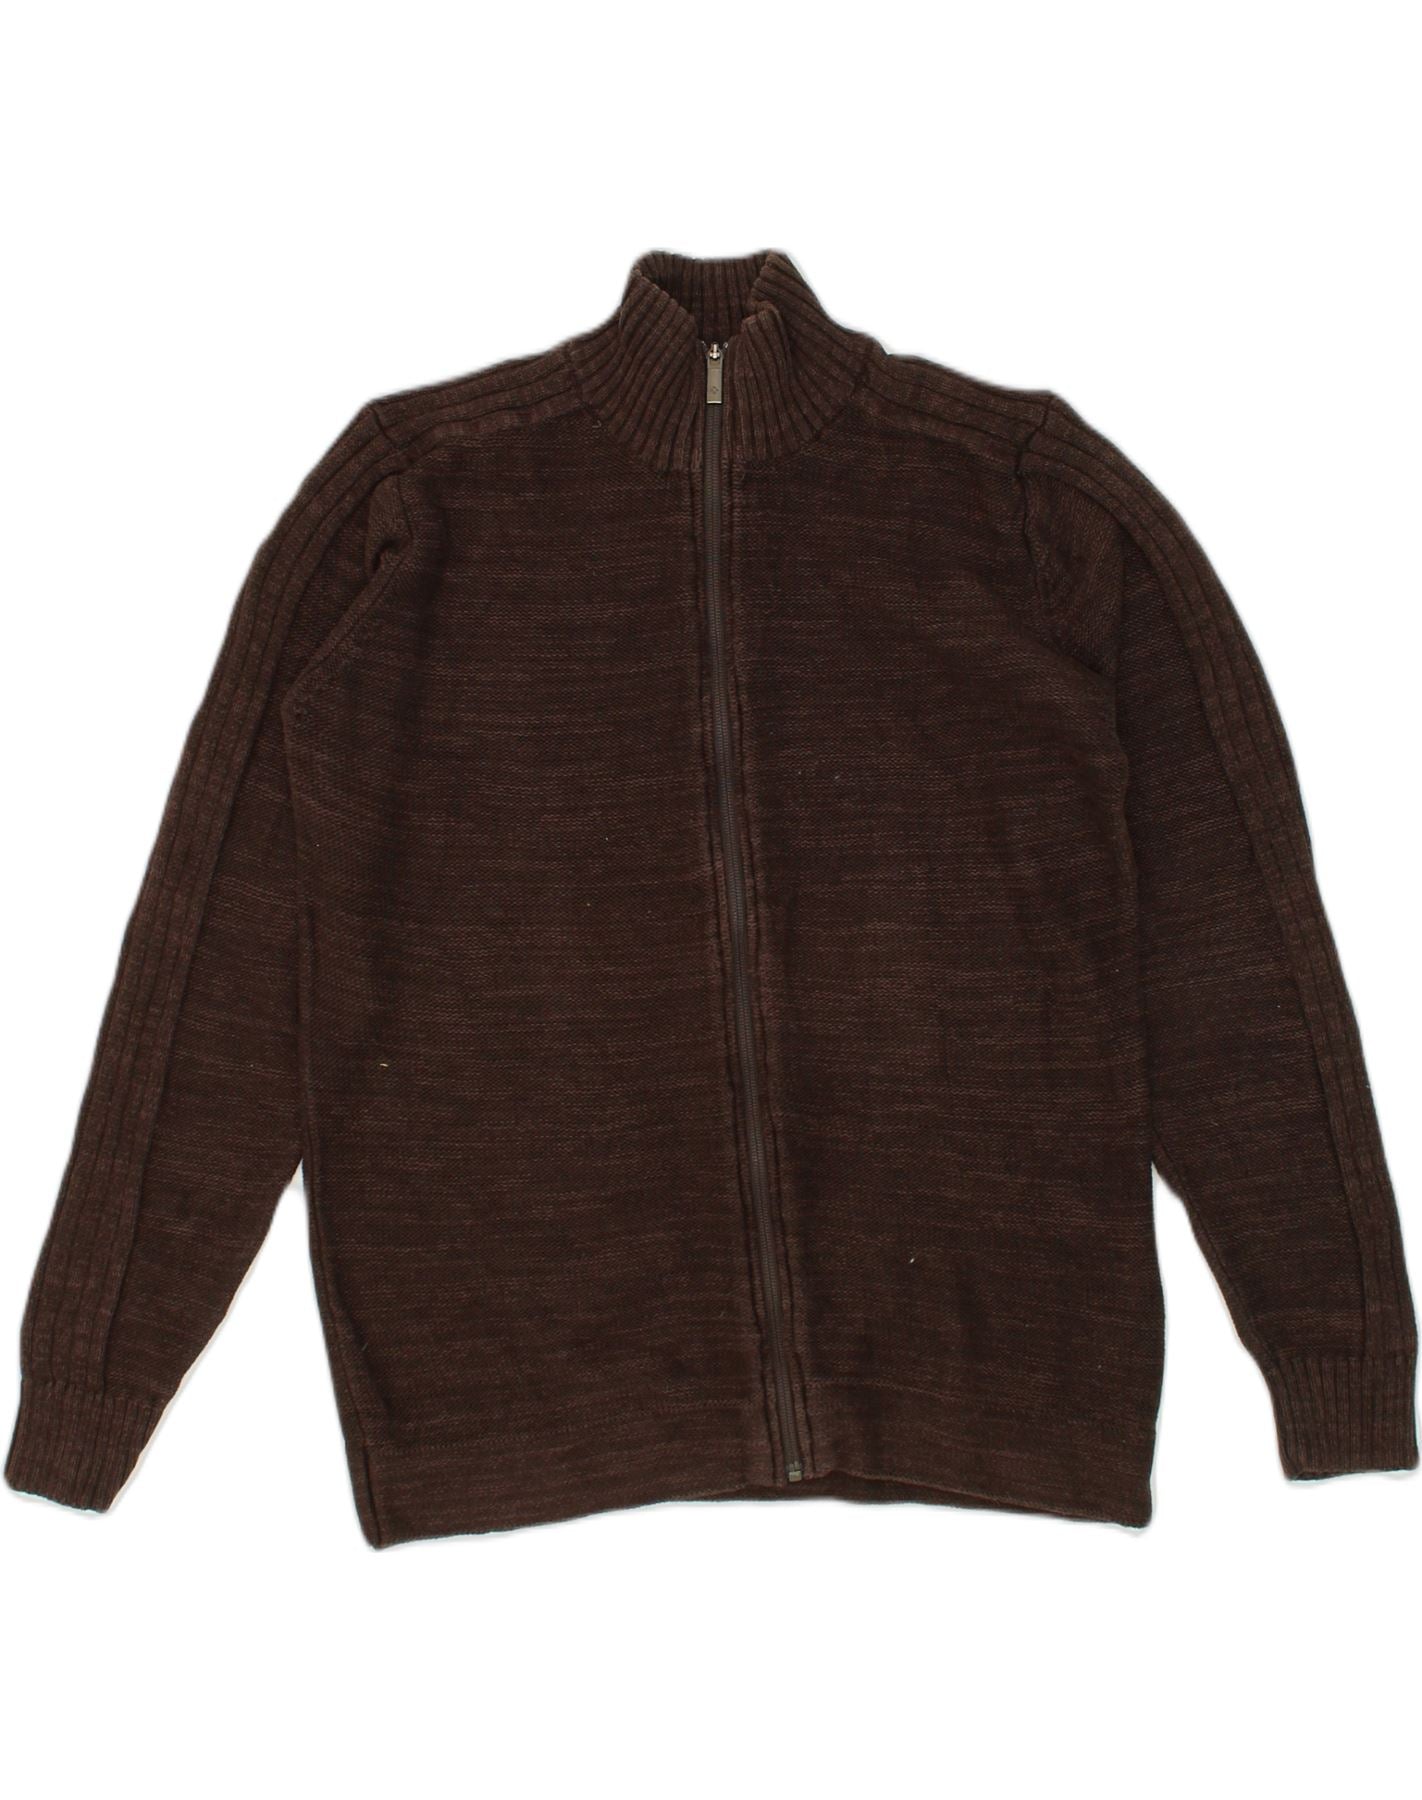 COLUMBIA Herre cardigan sweater Medium Brun Bomuld | Vintage Columbia | Sparsommelighed | Brugt Columbia | Brugt tøj | Messina Hembry